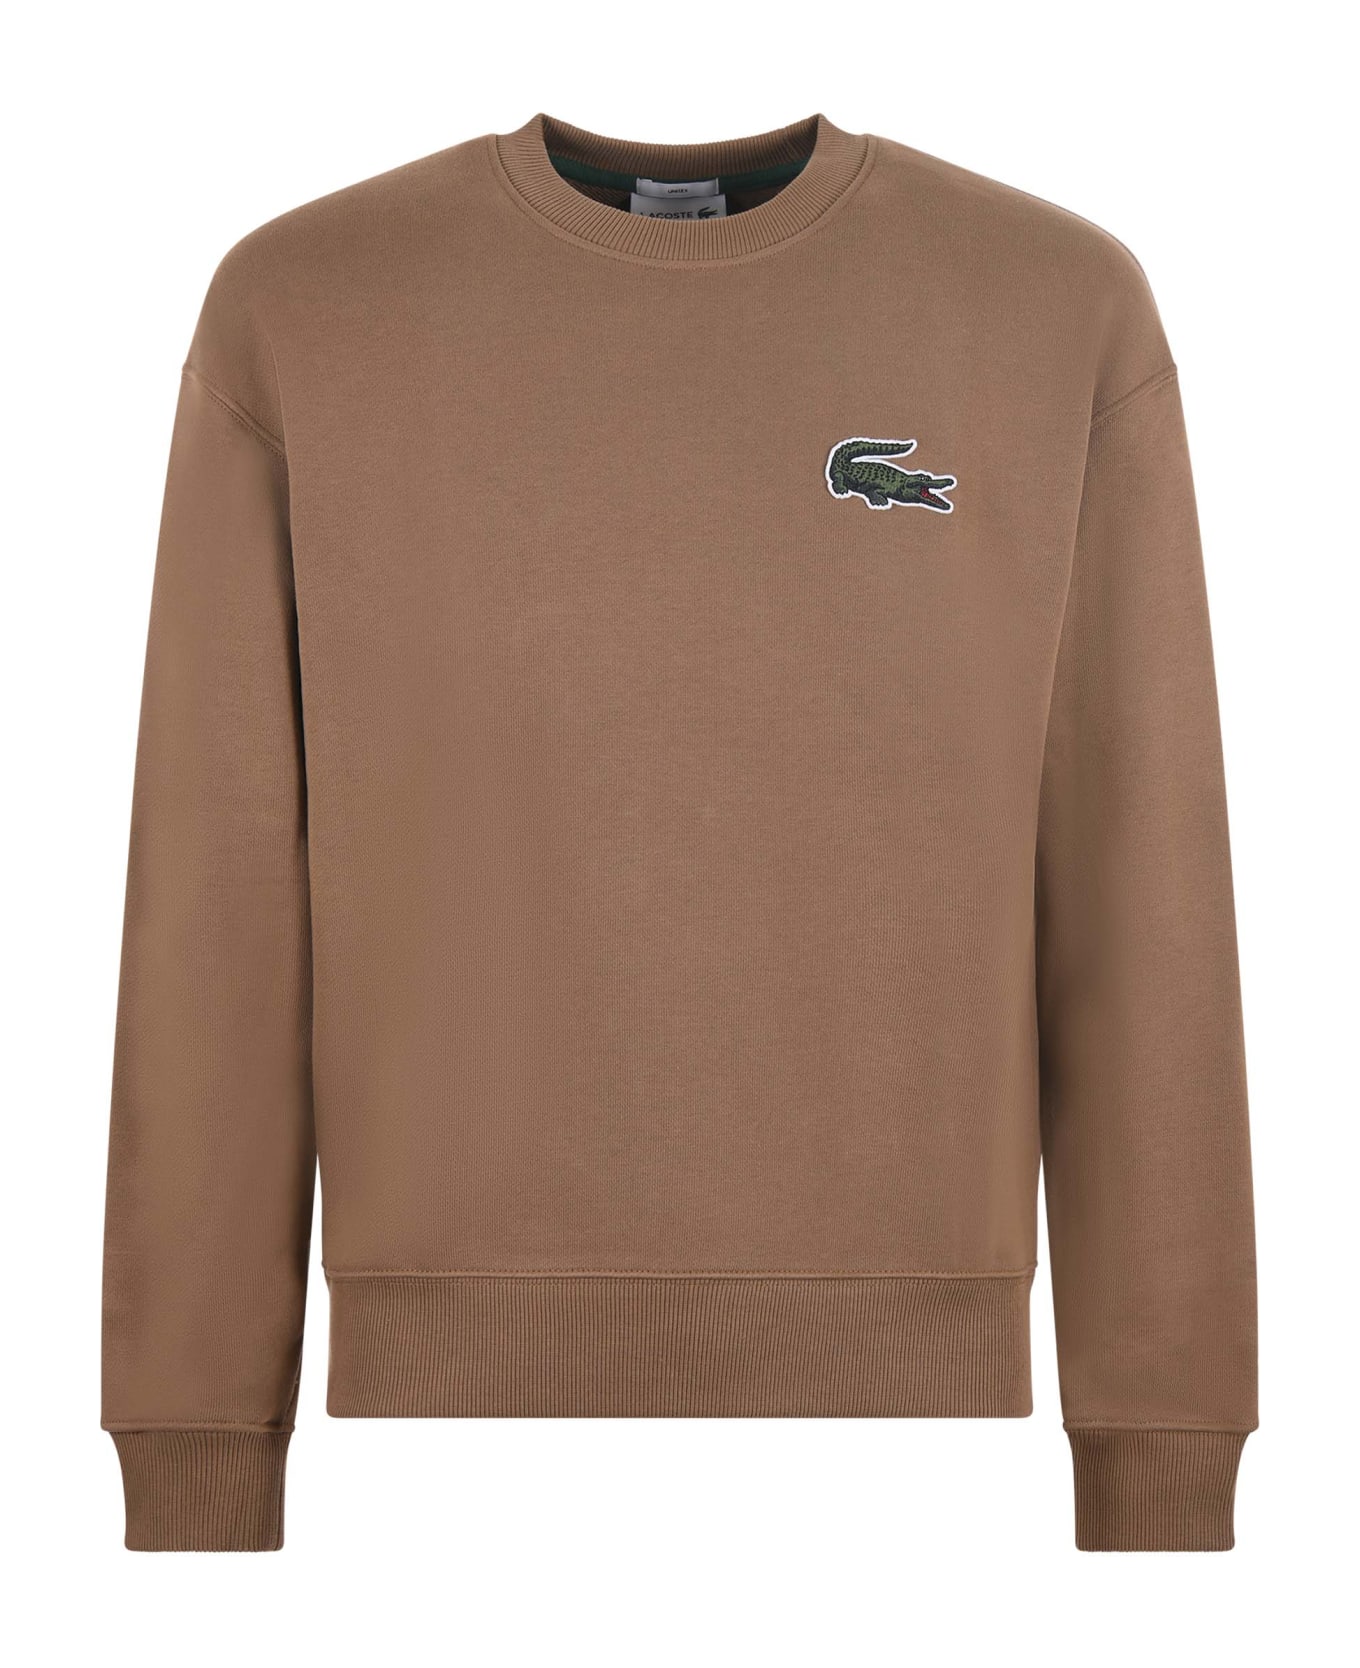 Lacoste Cotton Sweatshirt - Cammello